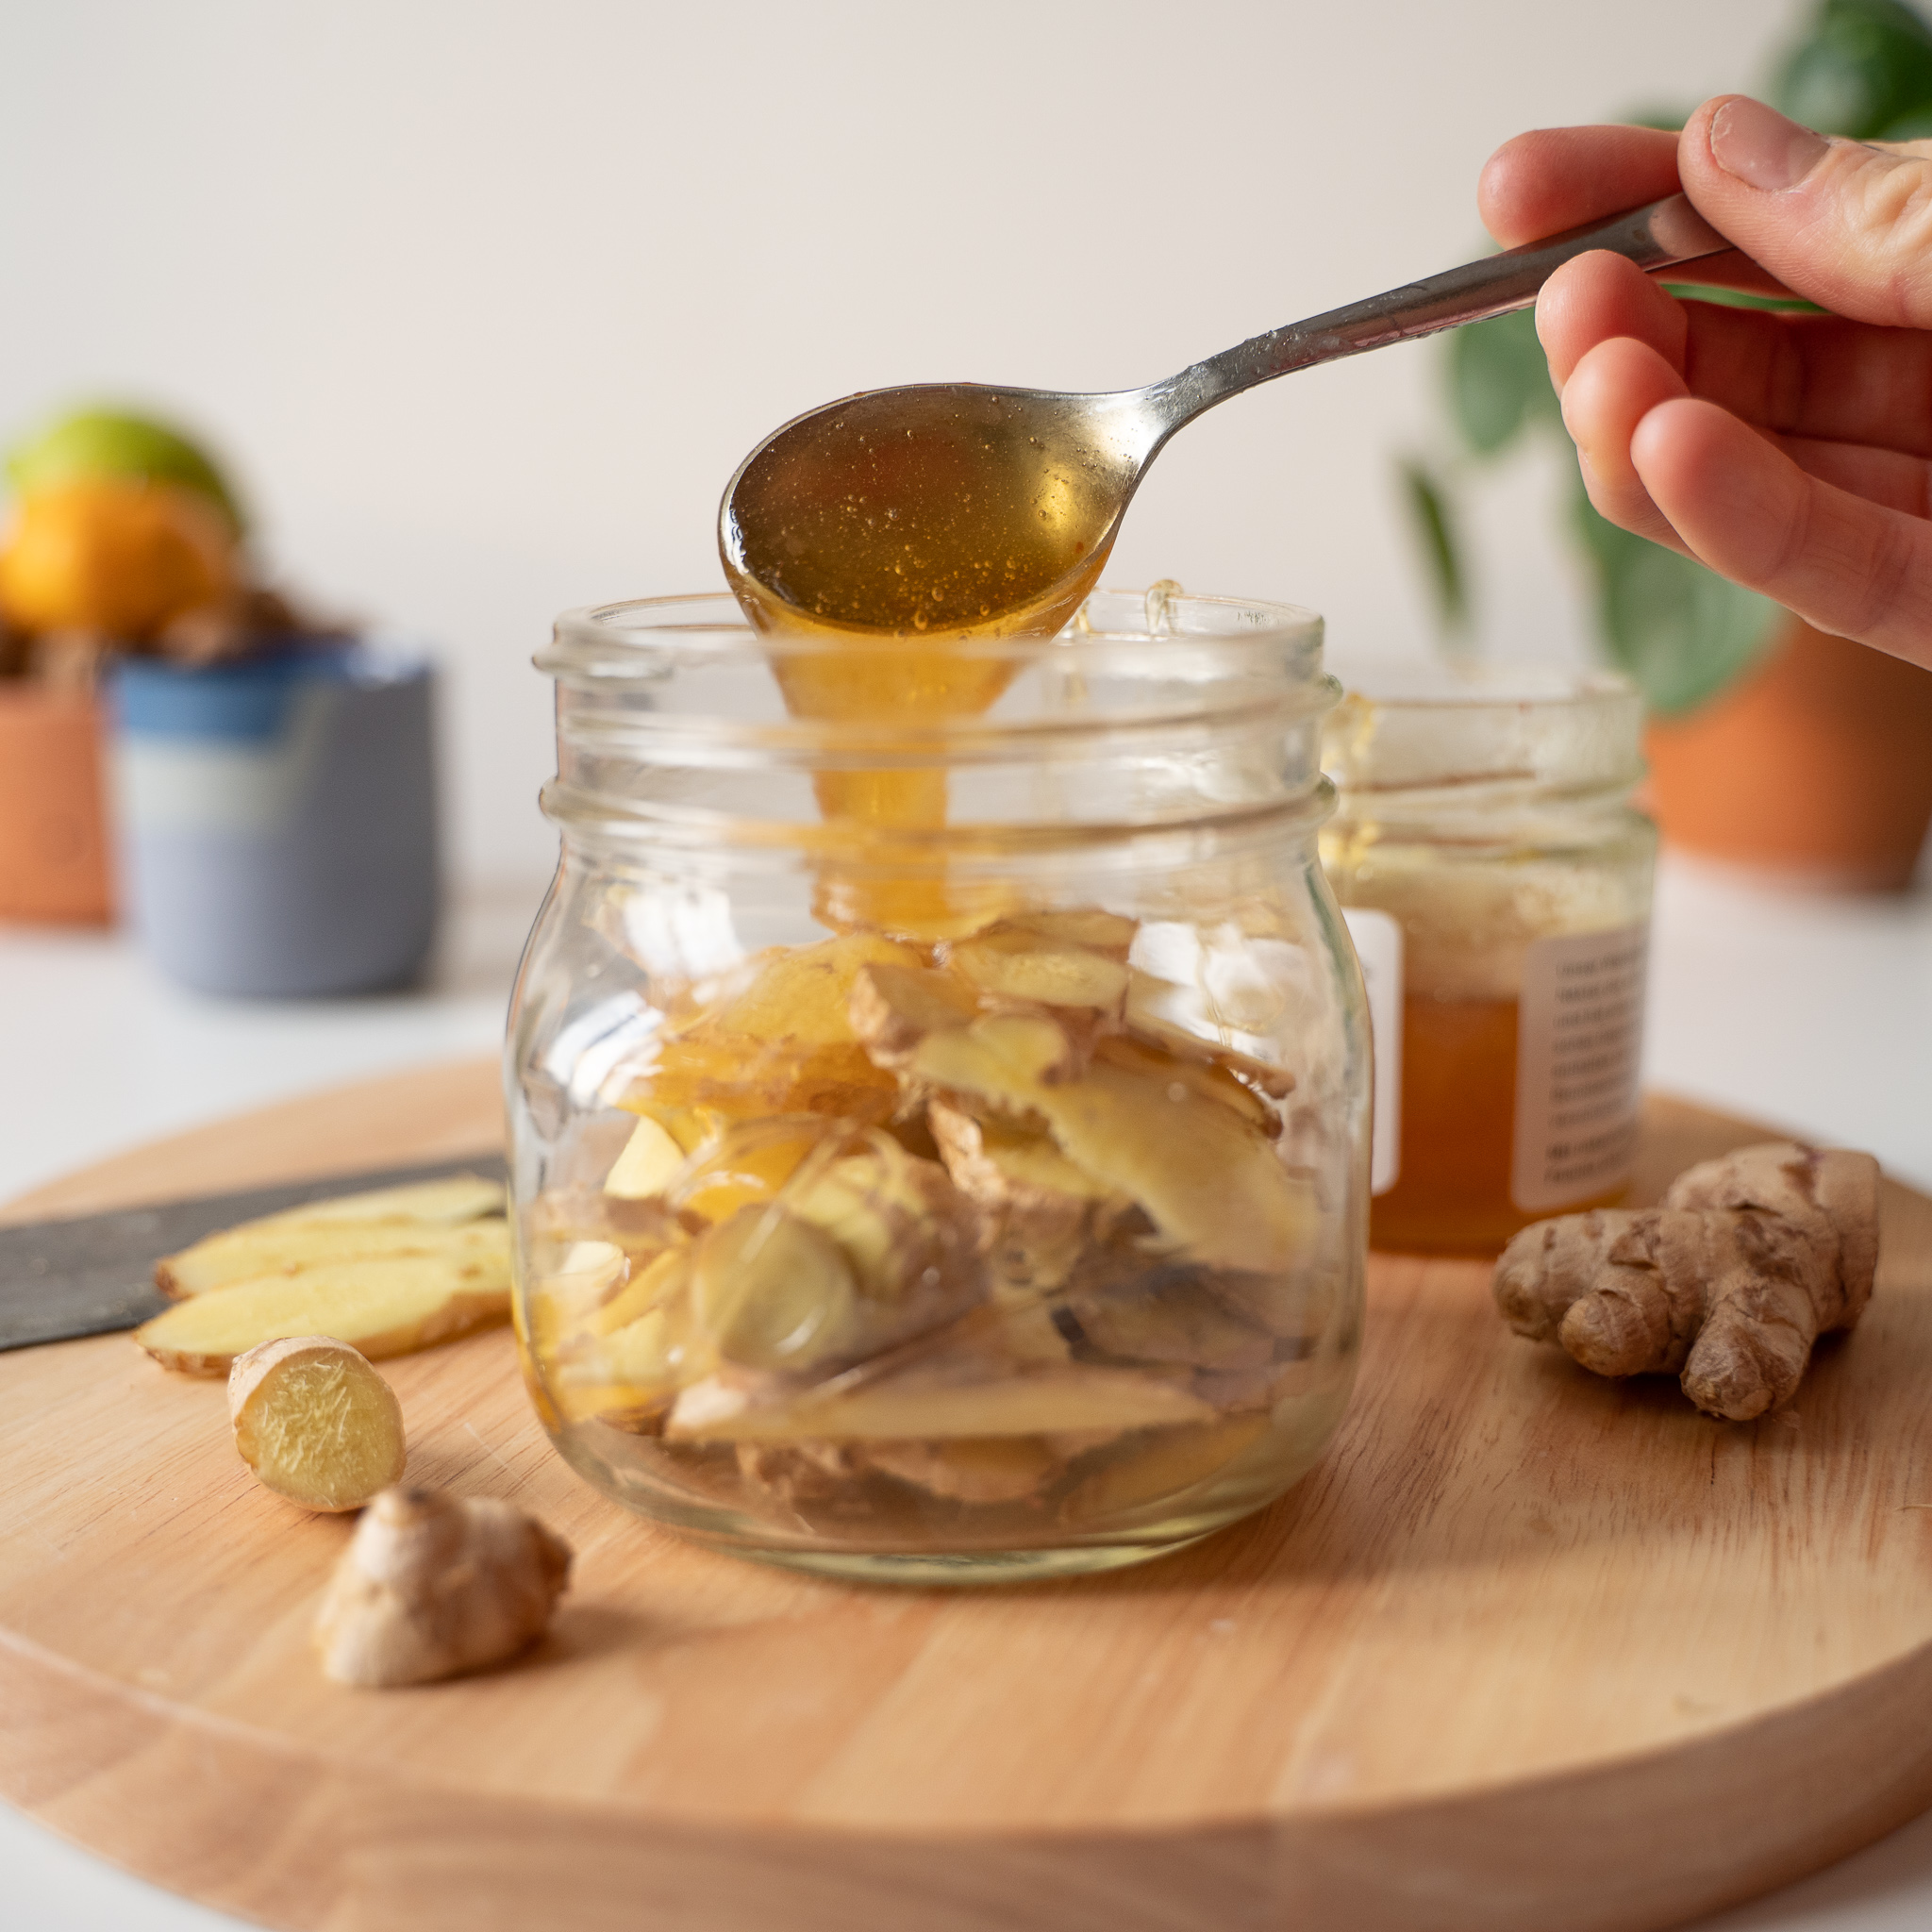 Ingwer in Honig fermentieren | Fairment - Lass Mikroben toben